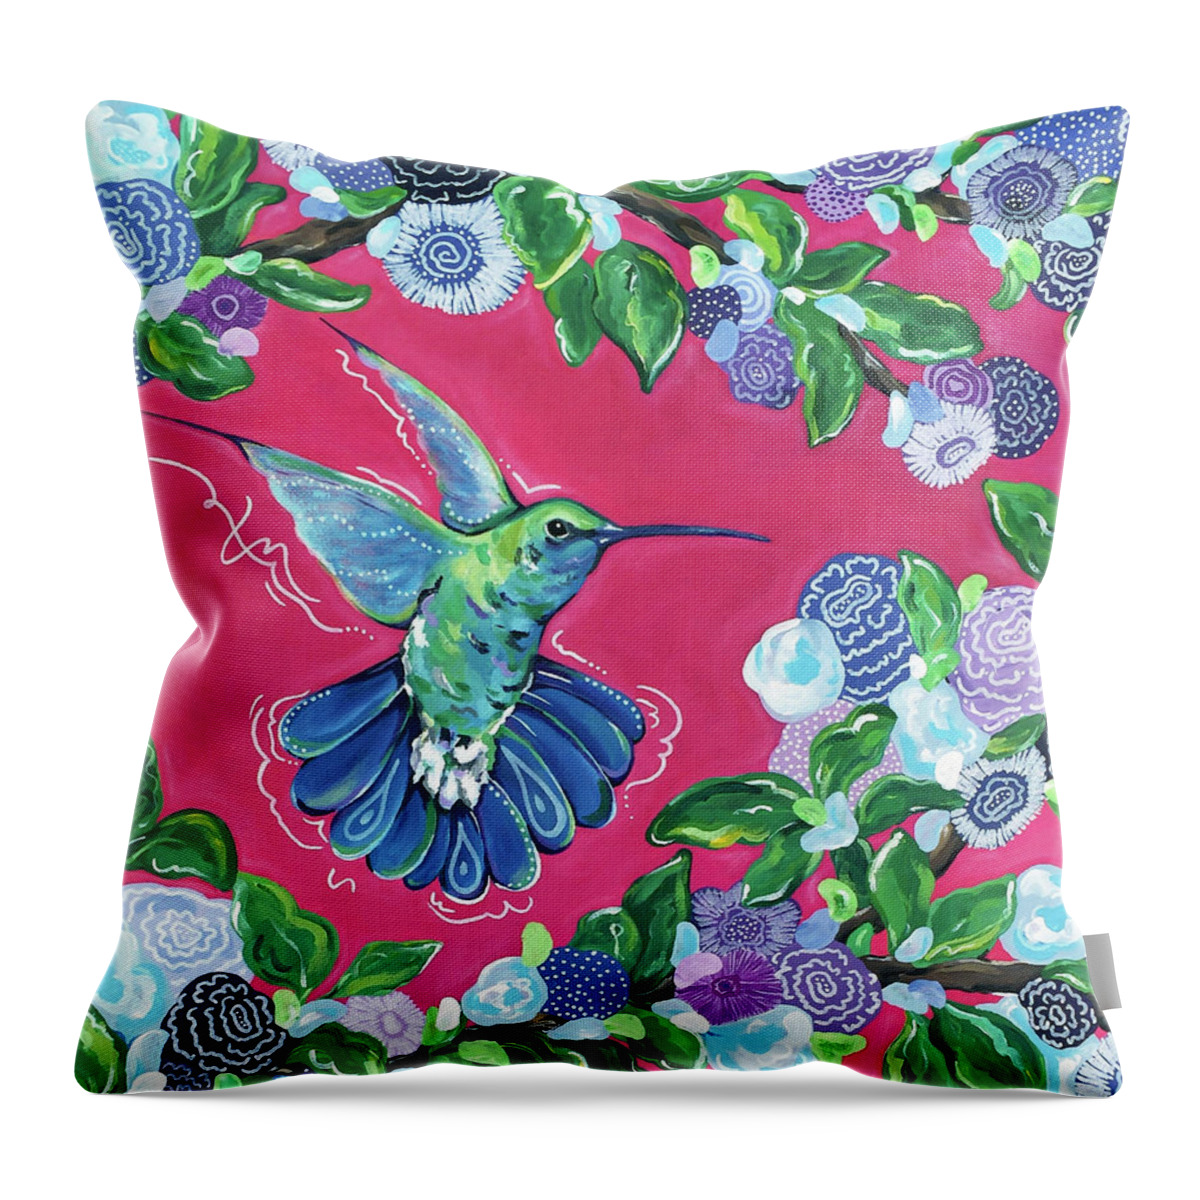 Hummingbird Throw Pillow featuring the painting Hummingbird by Beth Ann Scott